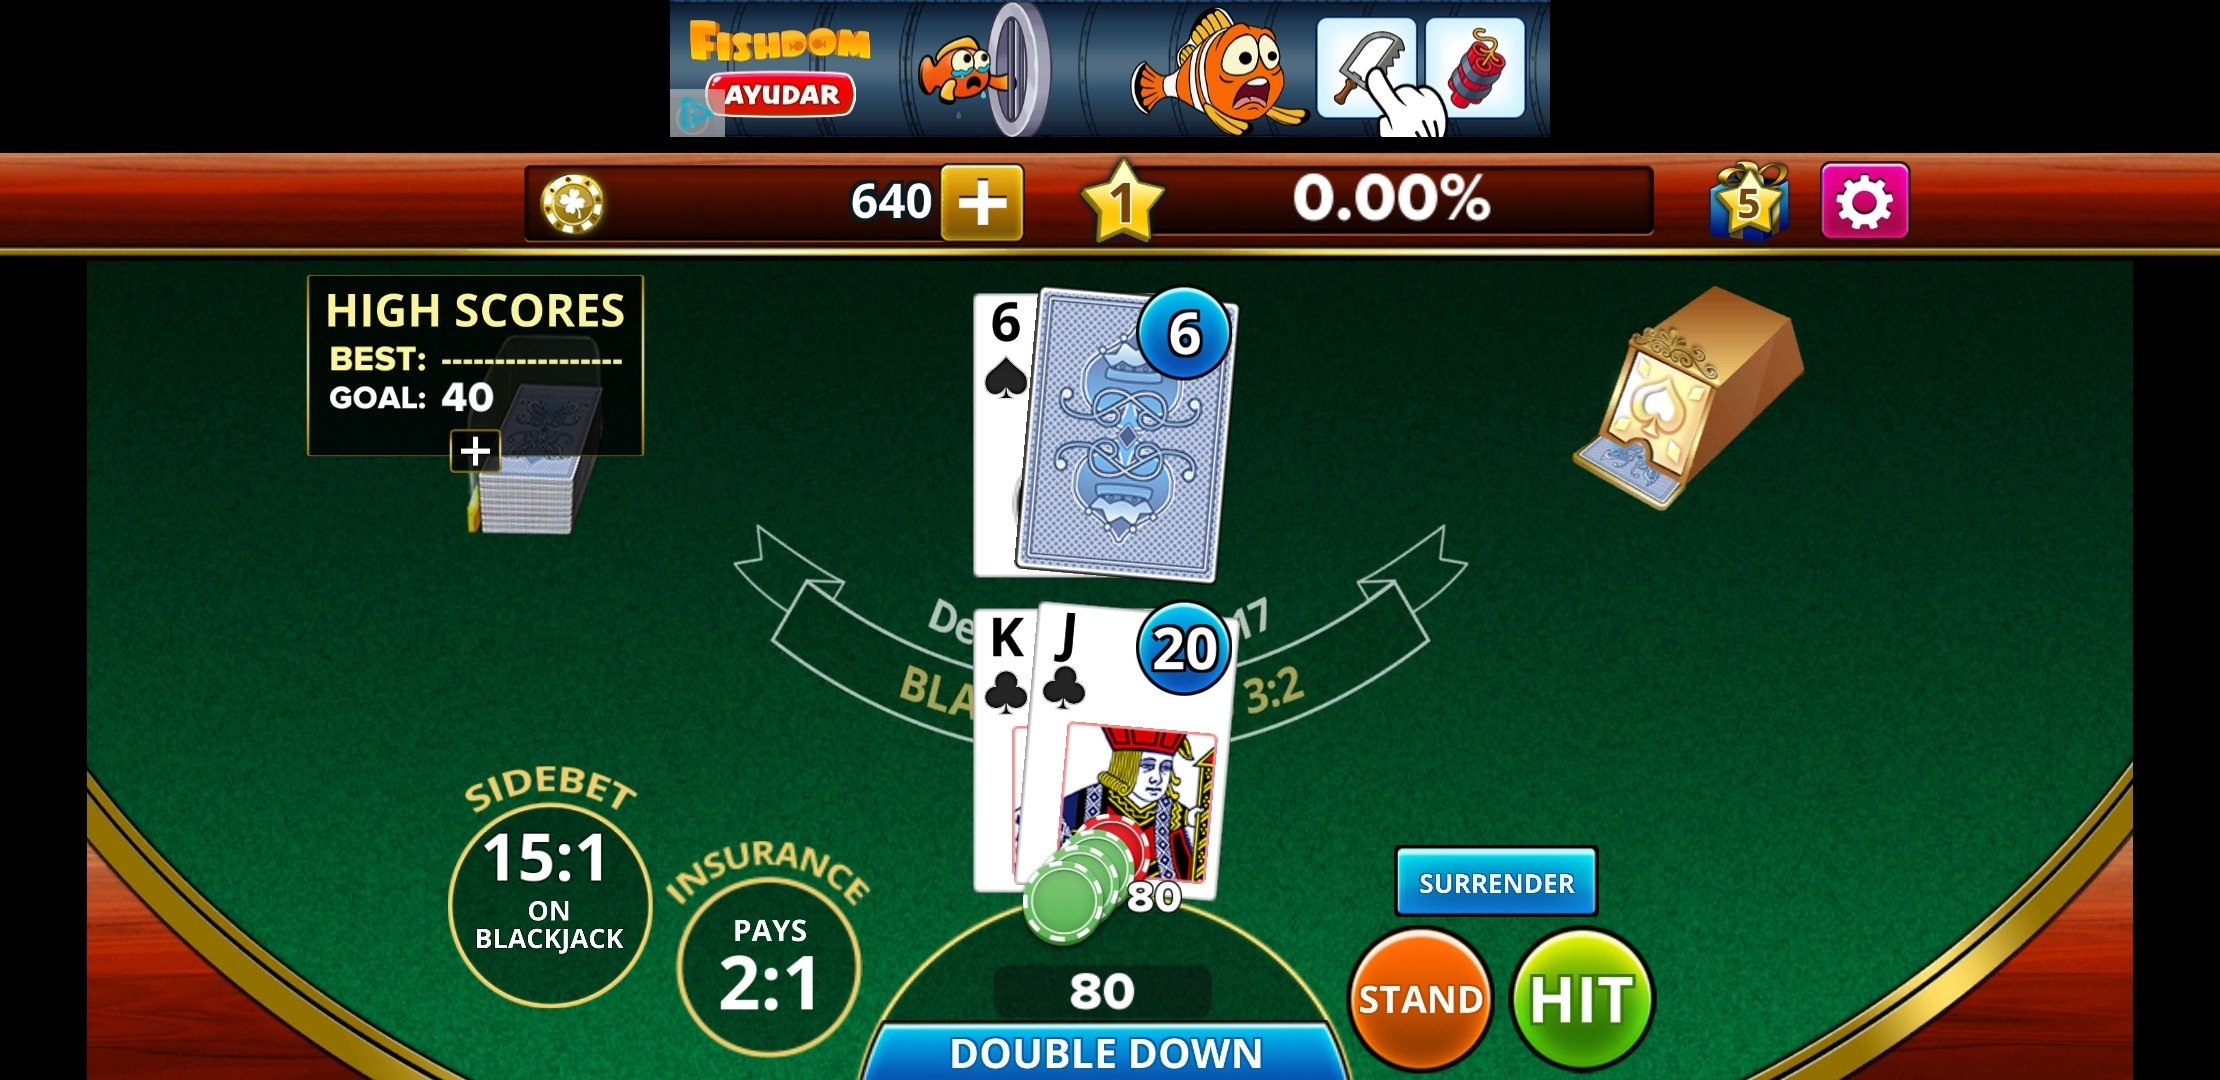 Casino para smartphones blackjack online gratis multijugador 532631